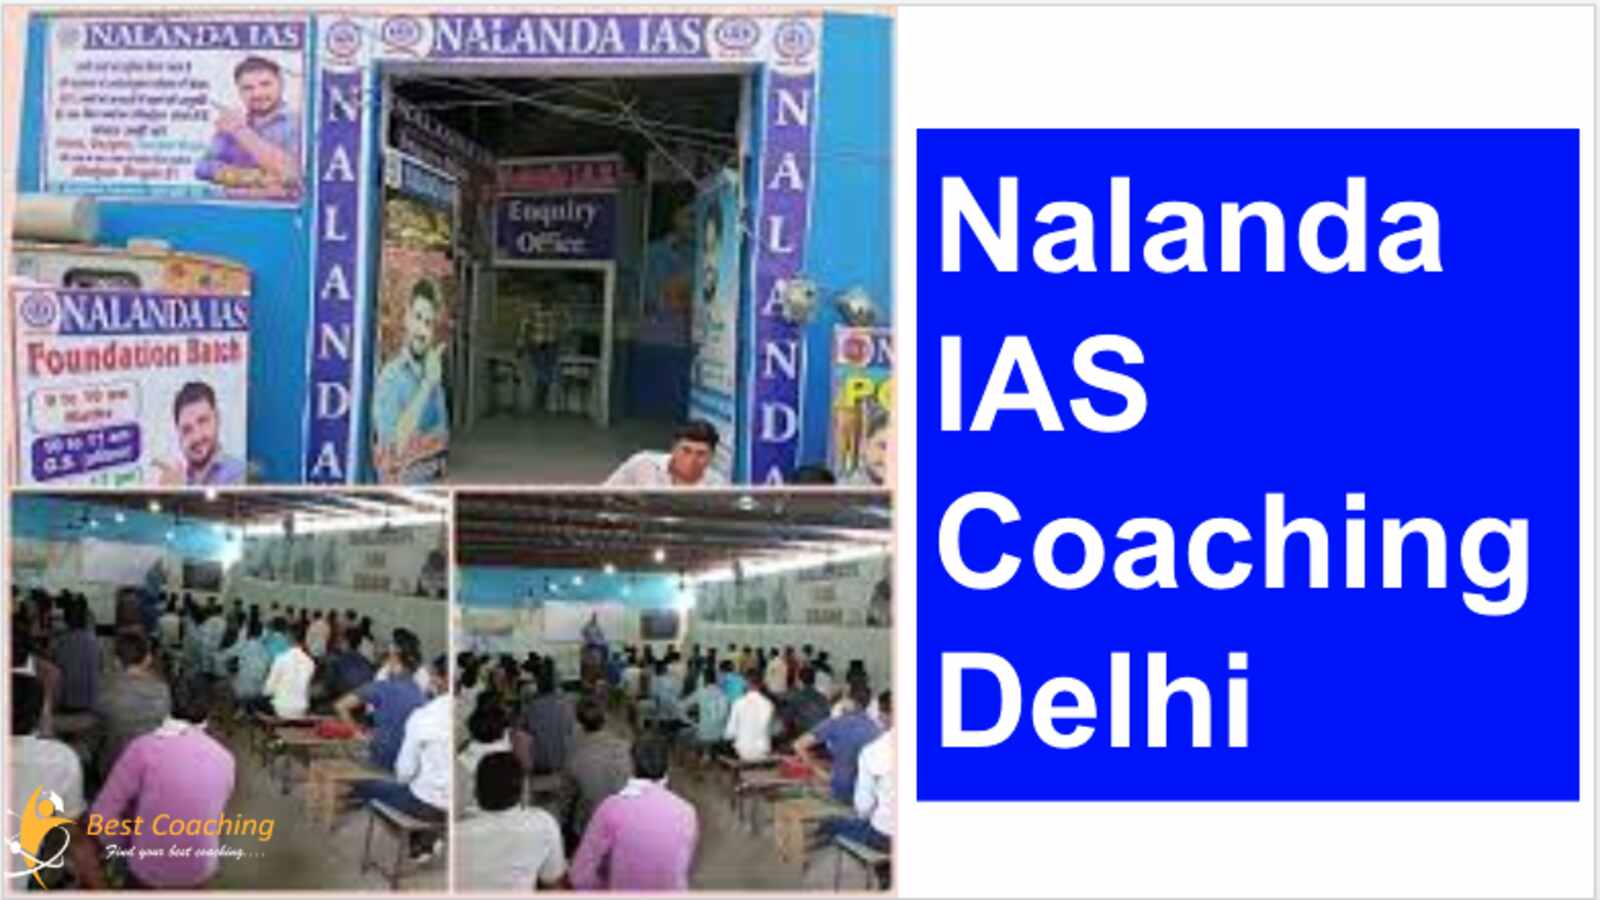 Nalanda IAS Coaching Delhi Review